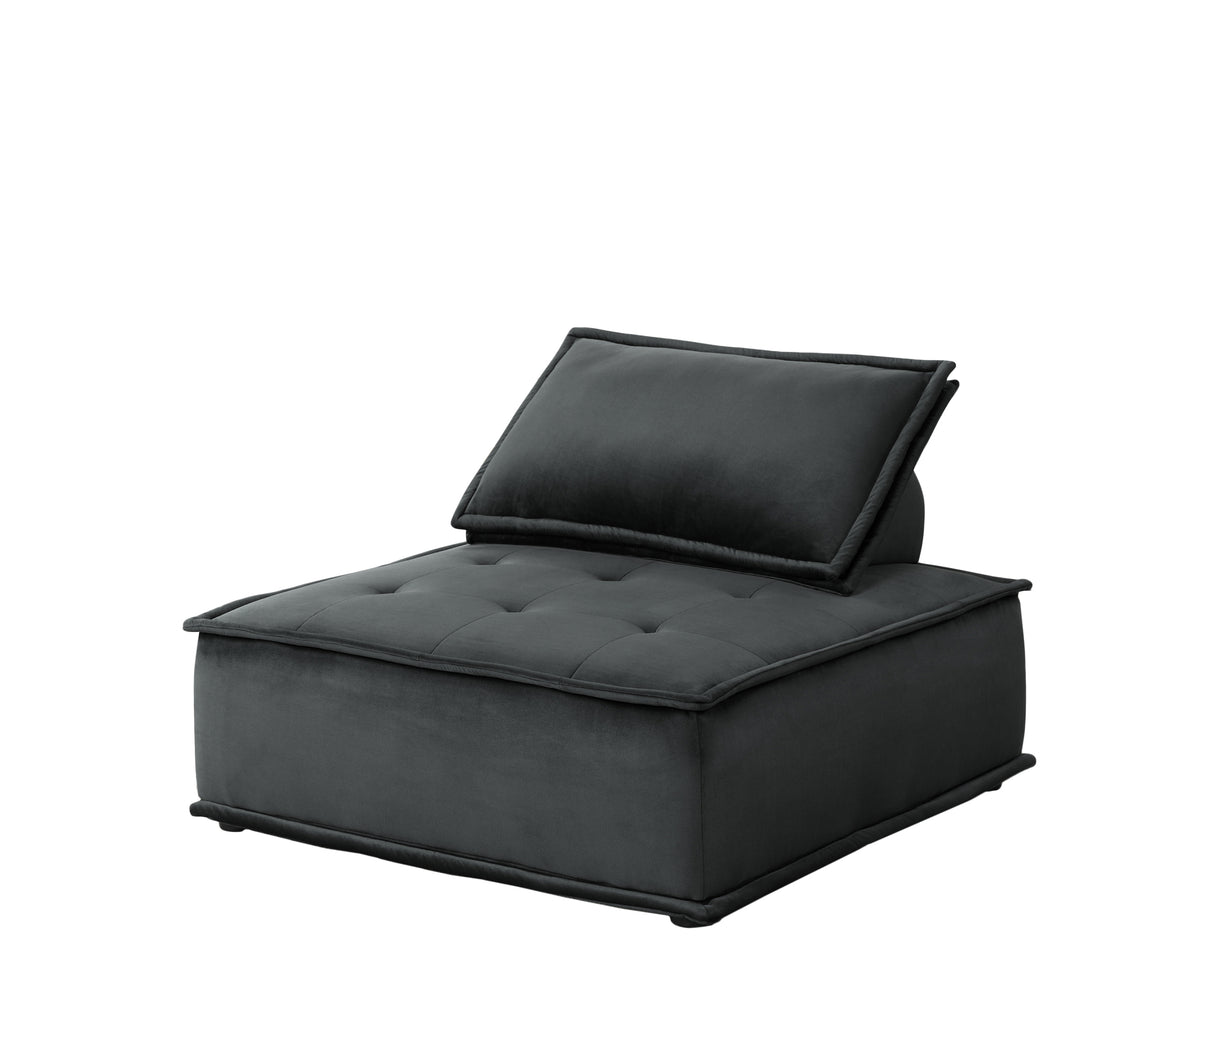 Anna Black Velvet Set of 2 Armless Lounge Chair - Home Elegance USA